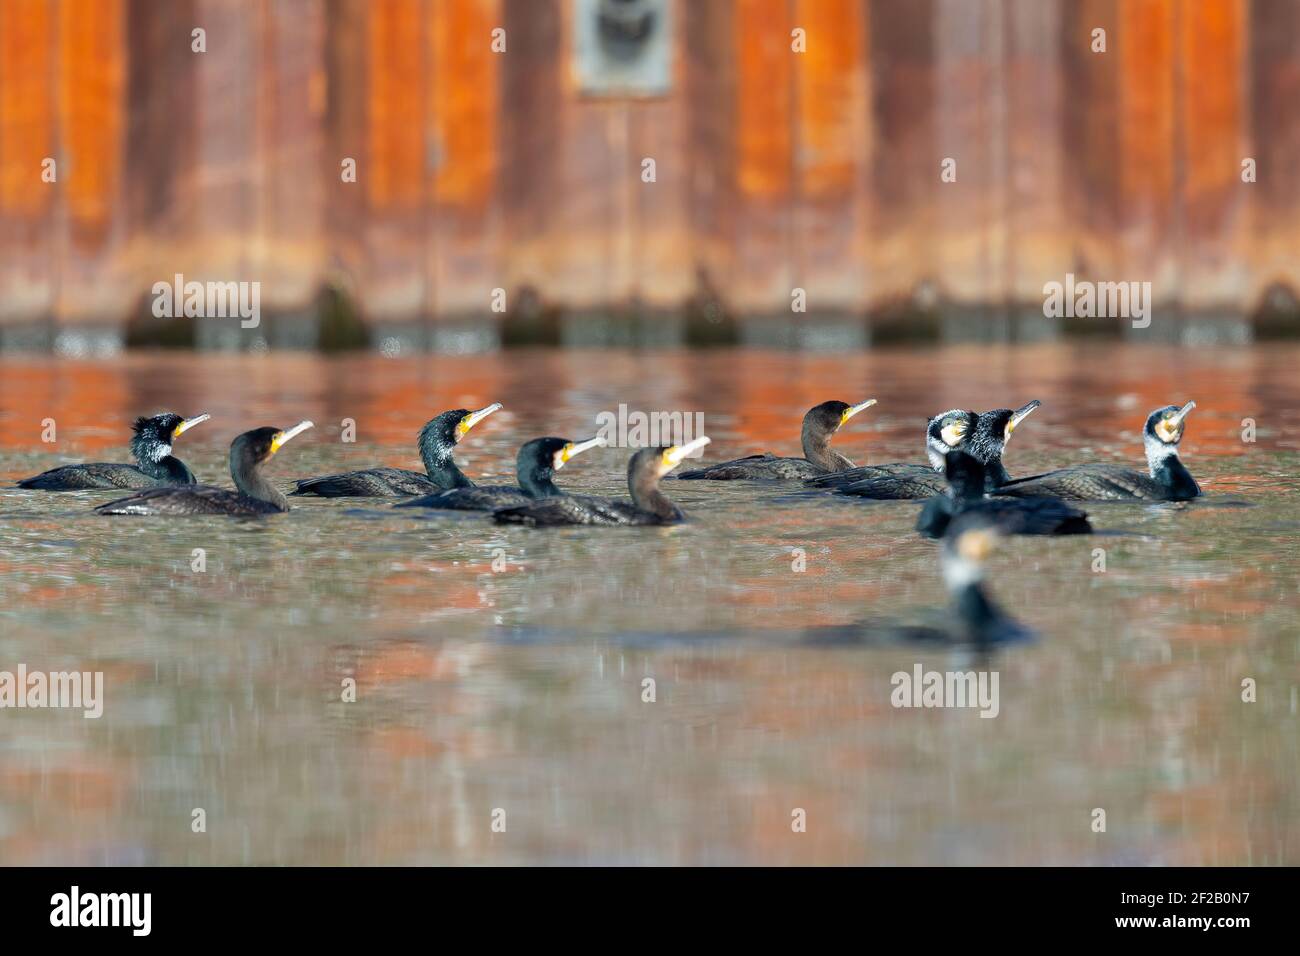 A big group of great cormorants (Phalacrocorax carbo) swimming and fishing at a lake. Stock Photo